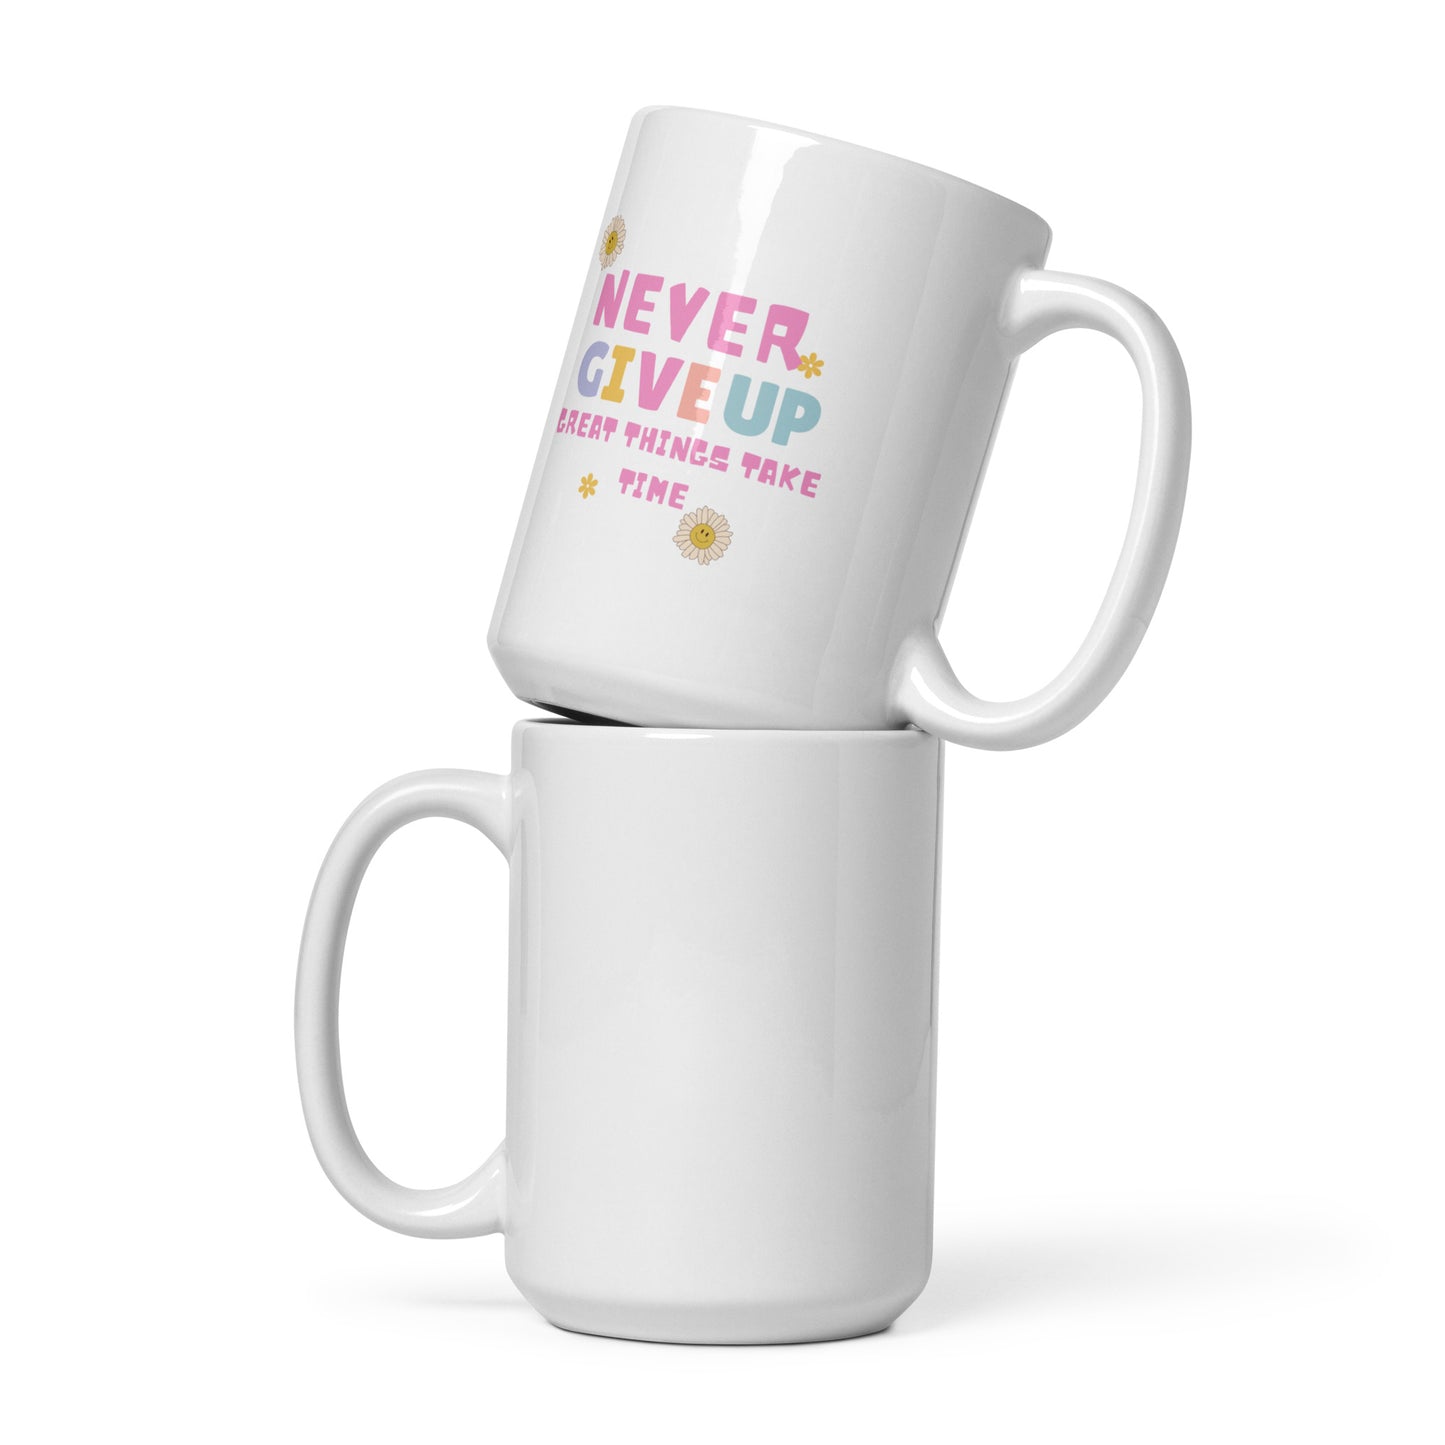 Never Give Up - White glossy mug